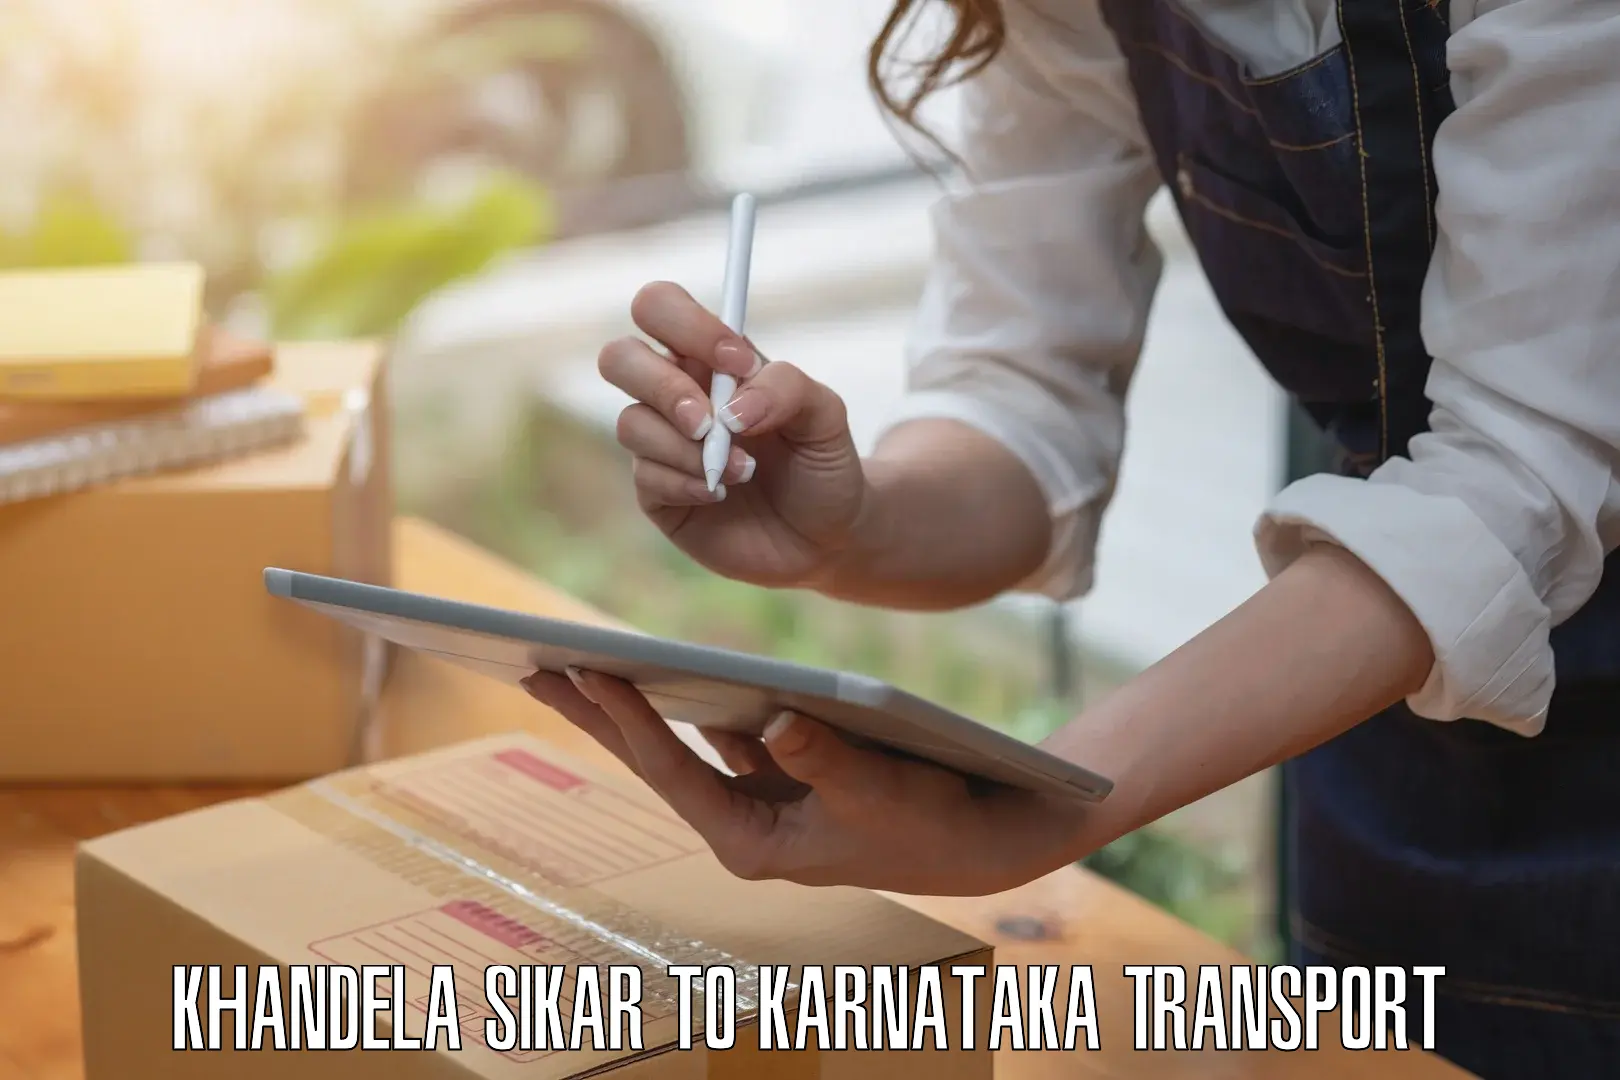 Transport in sharing Khandela Sikar to Karnataka